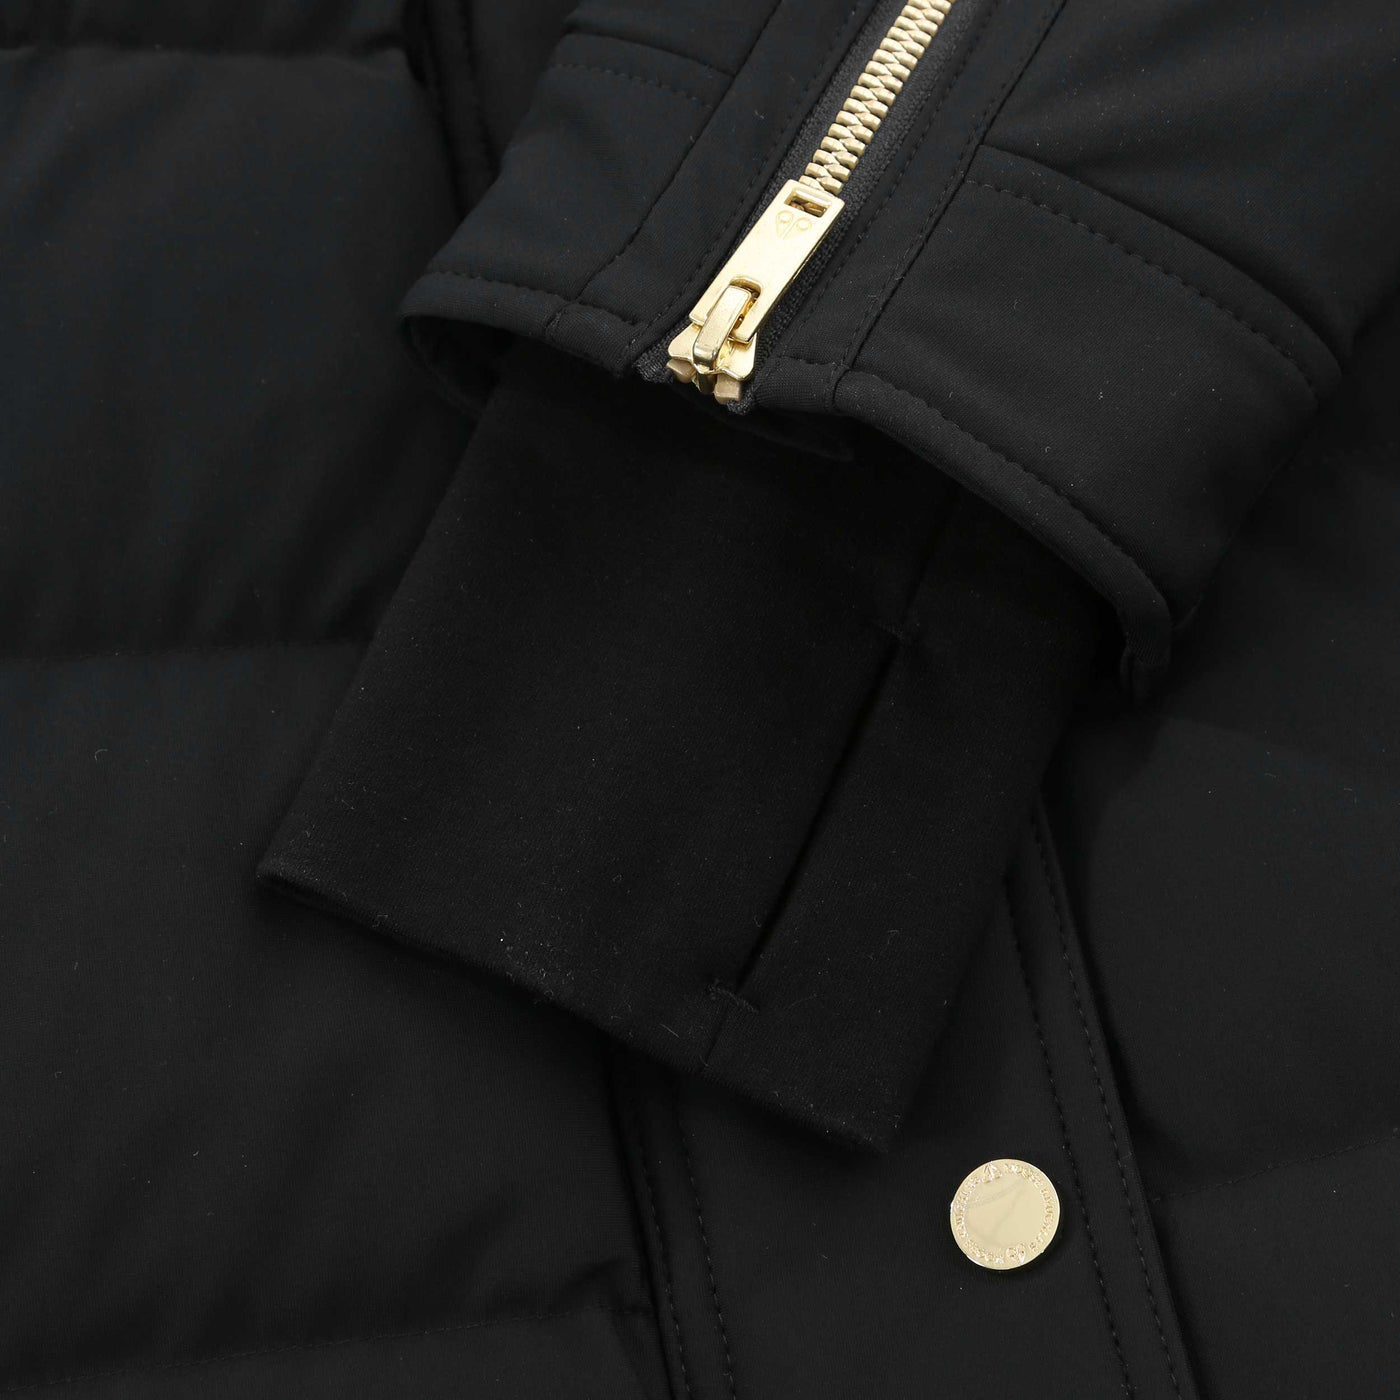 Moose Knuckles Watershed Parka Ladies Jacket in Black & Gold Cuff